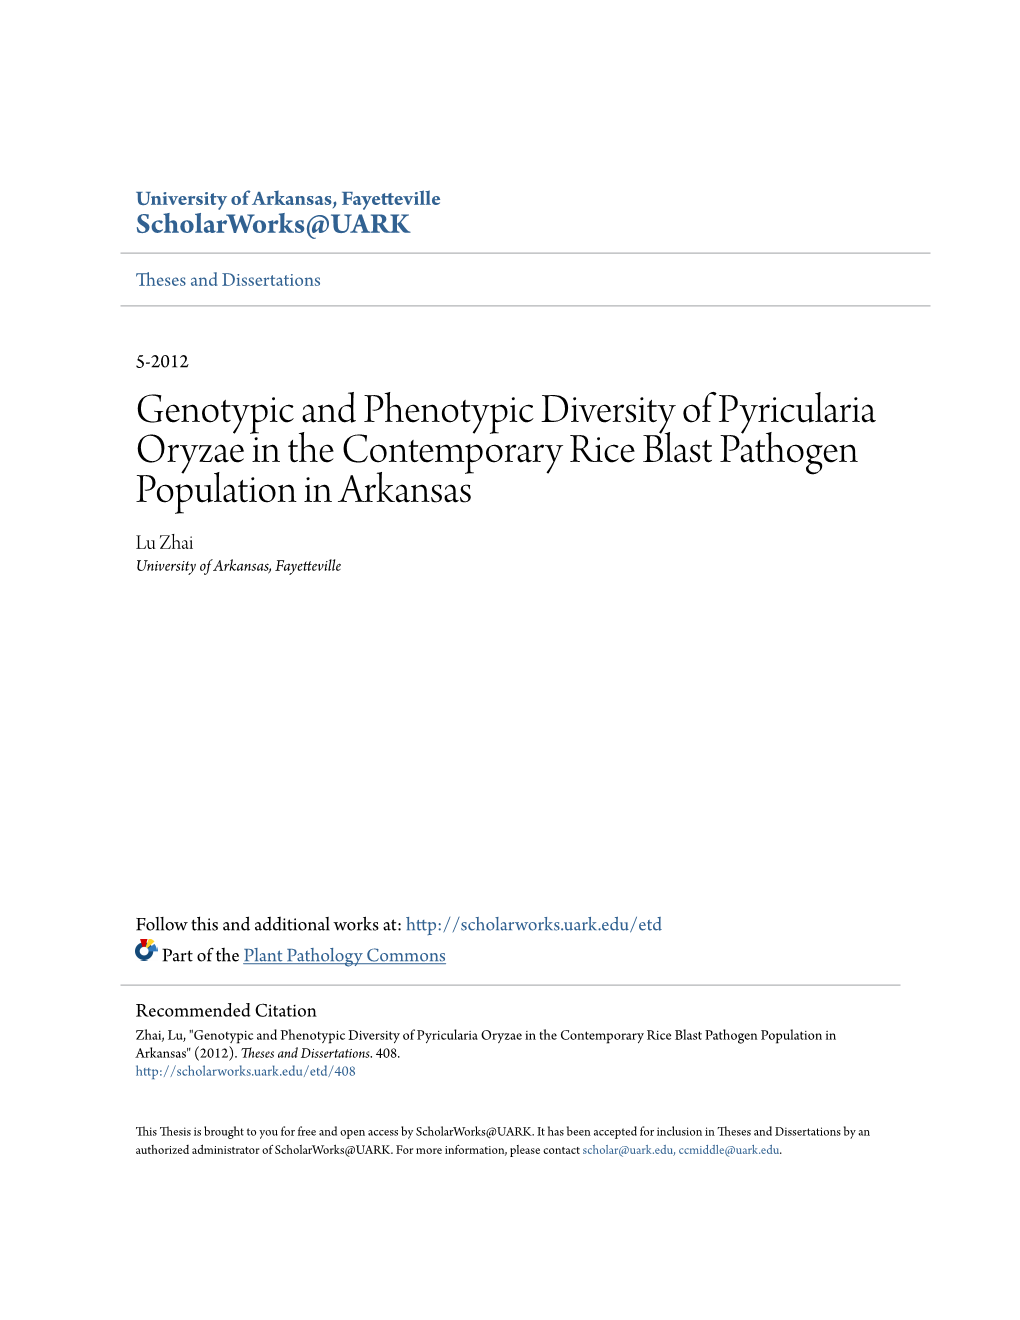 Genotypic and Phenotypic Diversity of Pyricularia Oryzae in the Contemporary Rice Blast Pathogen Population in Arkansas Lu Zhai University of Arkansas, Fayetteville